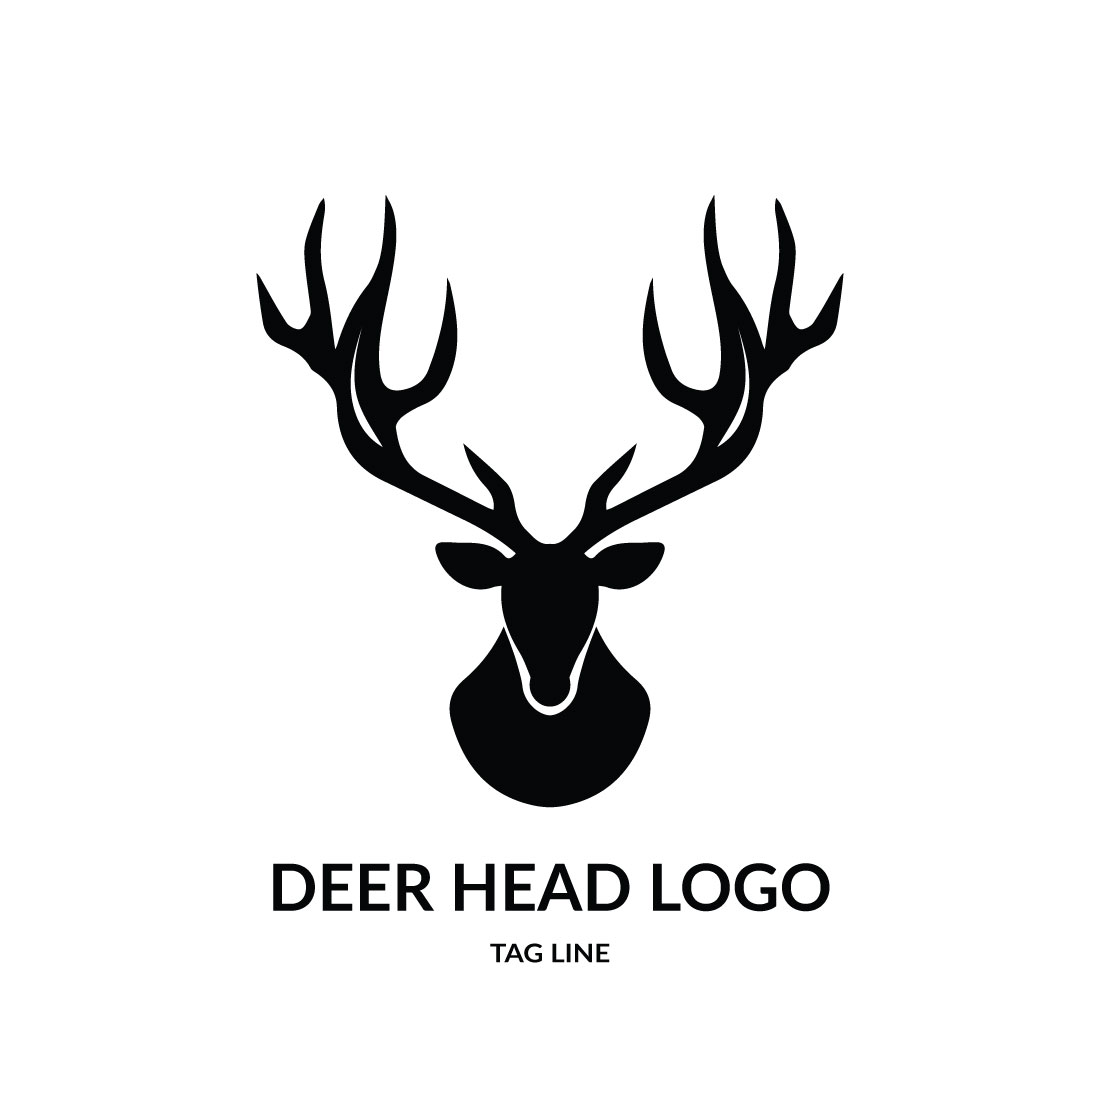 Deer Head Logo Template cover image.